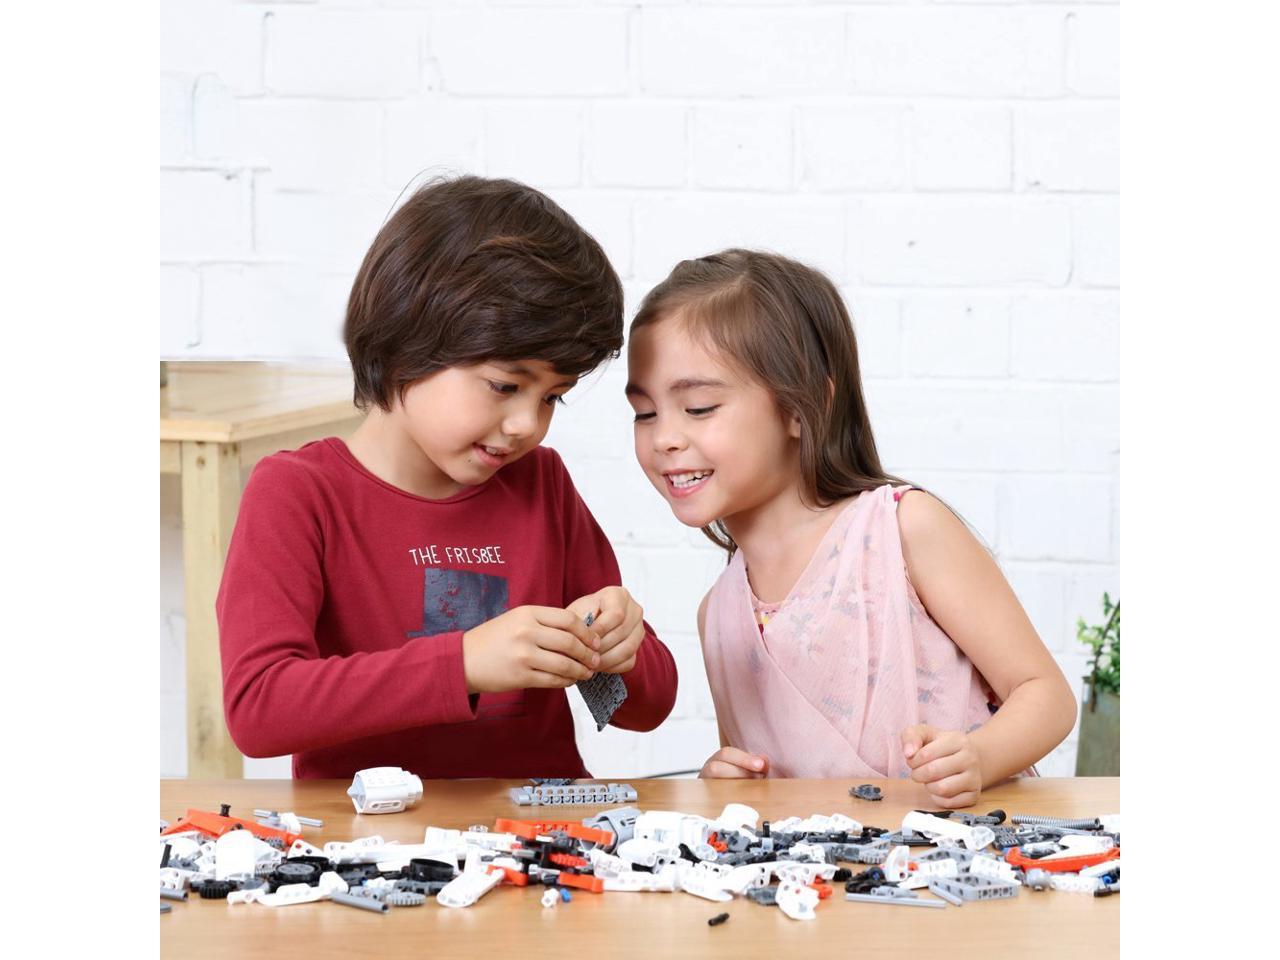 Xiaomi MITU Mi Robot Builder, STEM Toys, Remote Control Programmable Toy, Building Blocks and Coding Kit, Robotics for Kids, 3 Modes 1 (978 Pieces) - Newegg.com